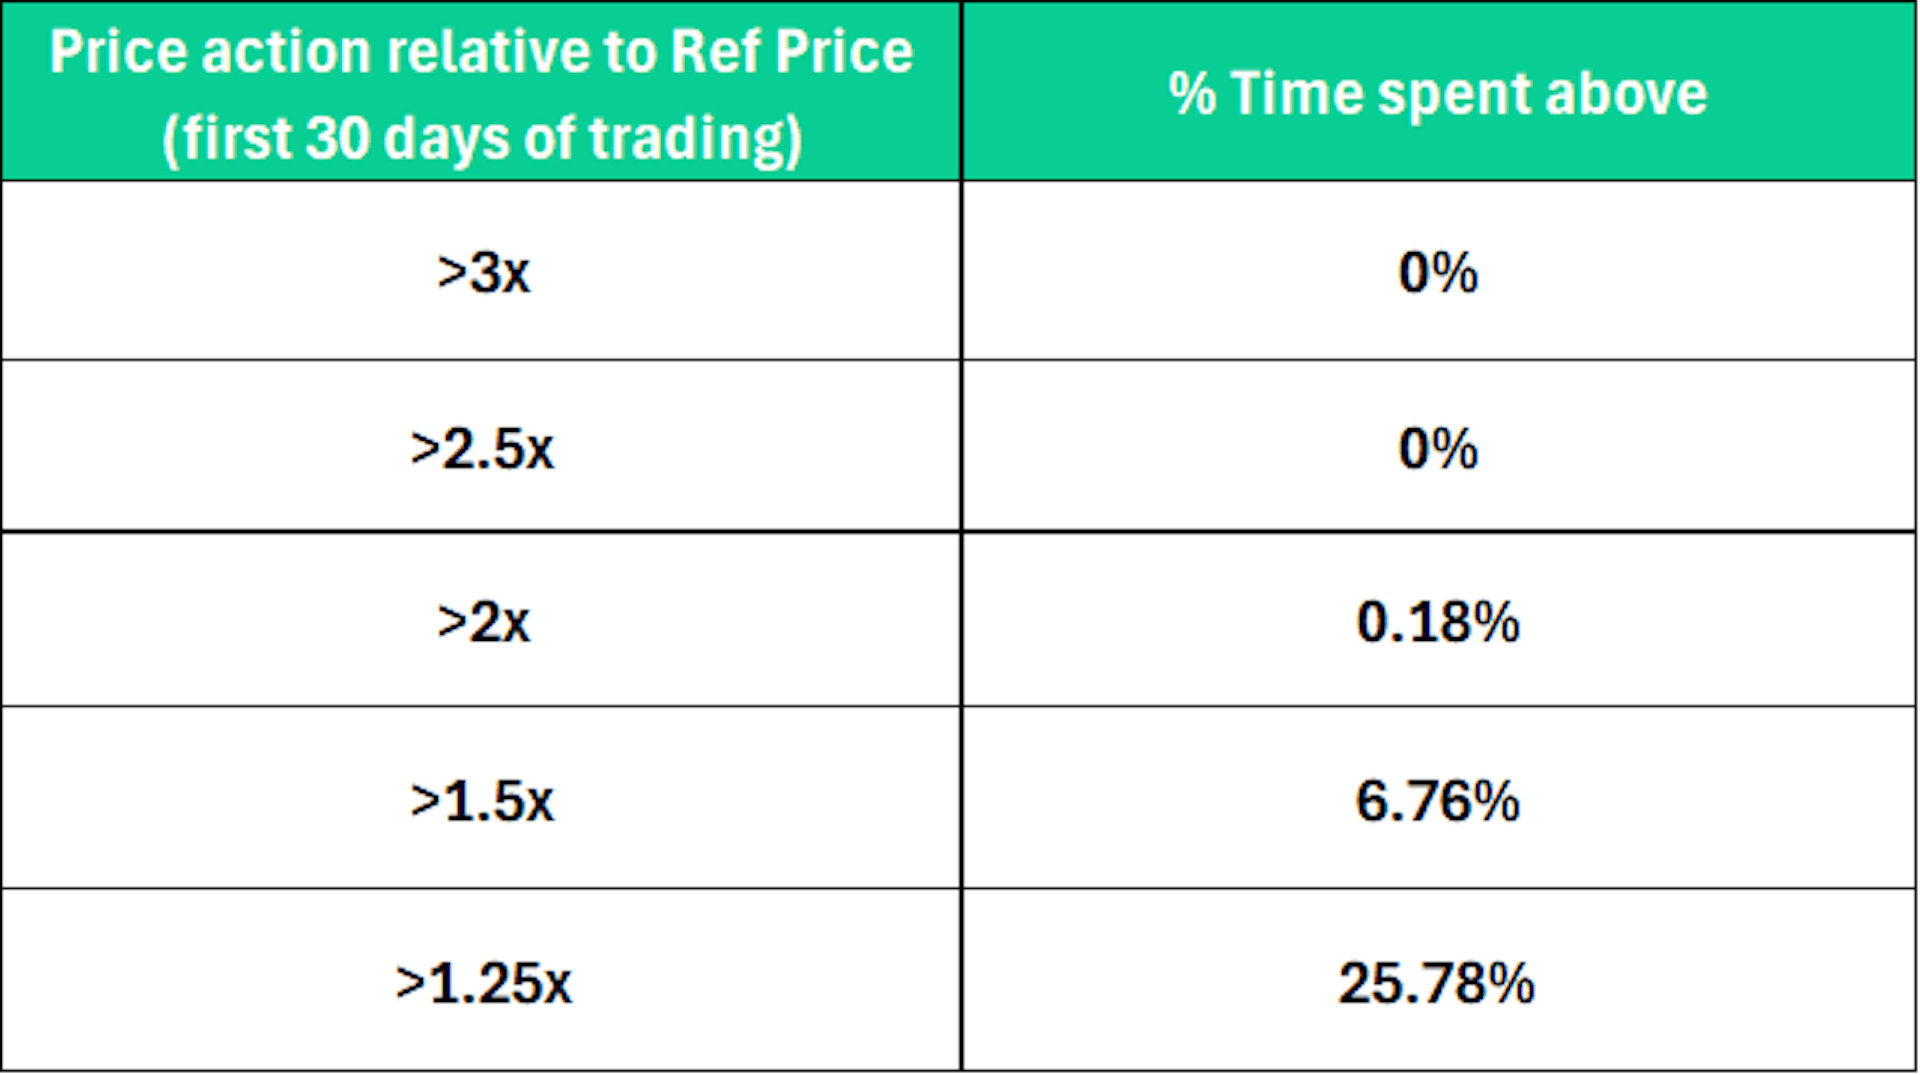 Price action relative to ref price